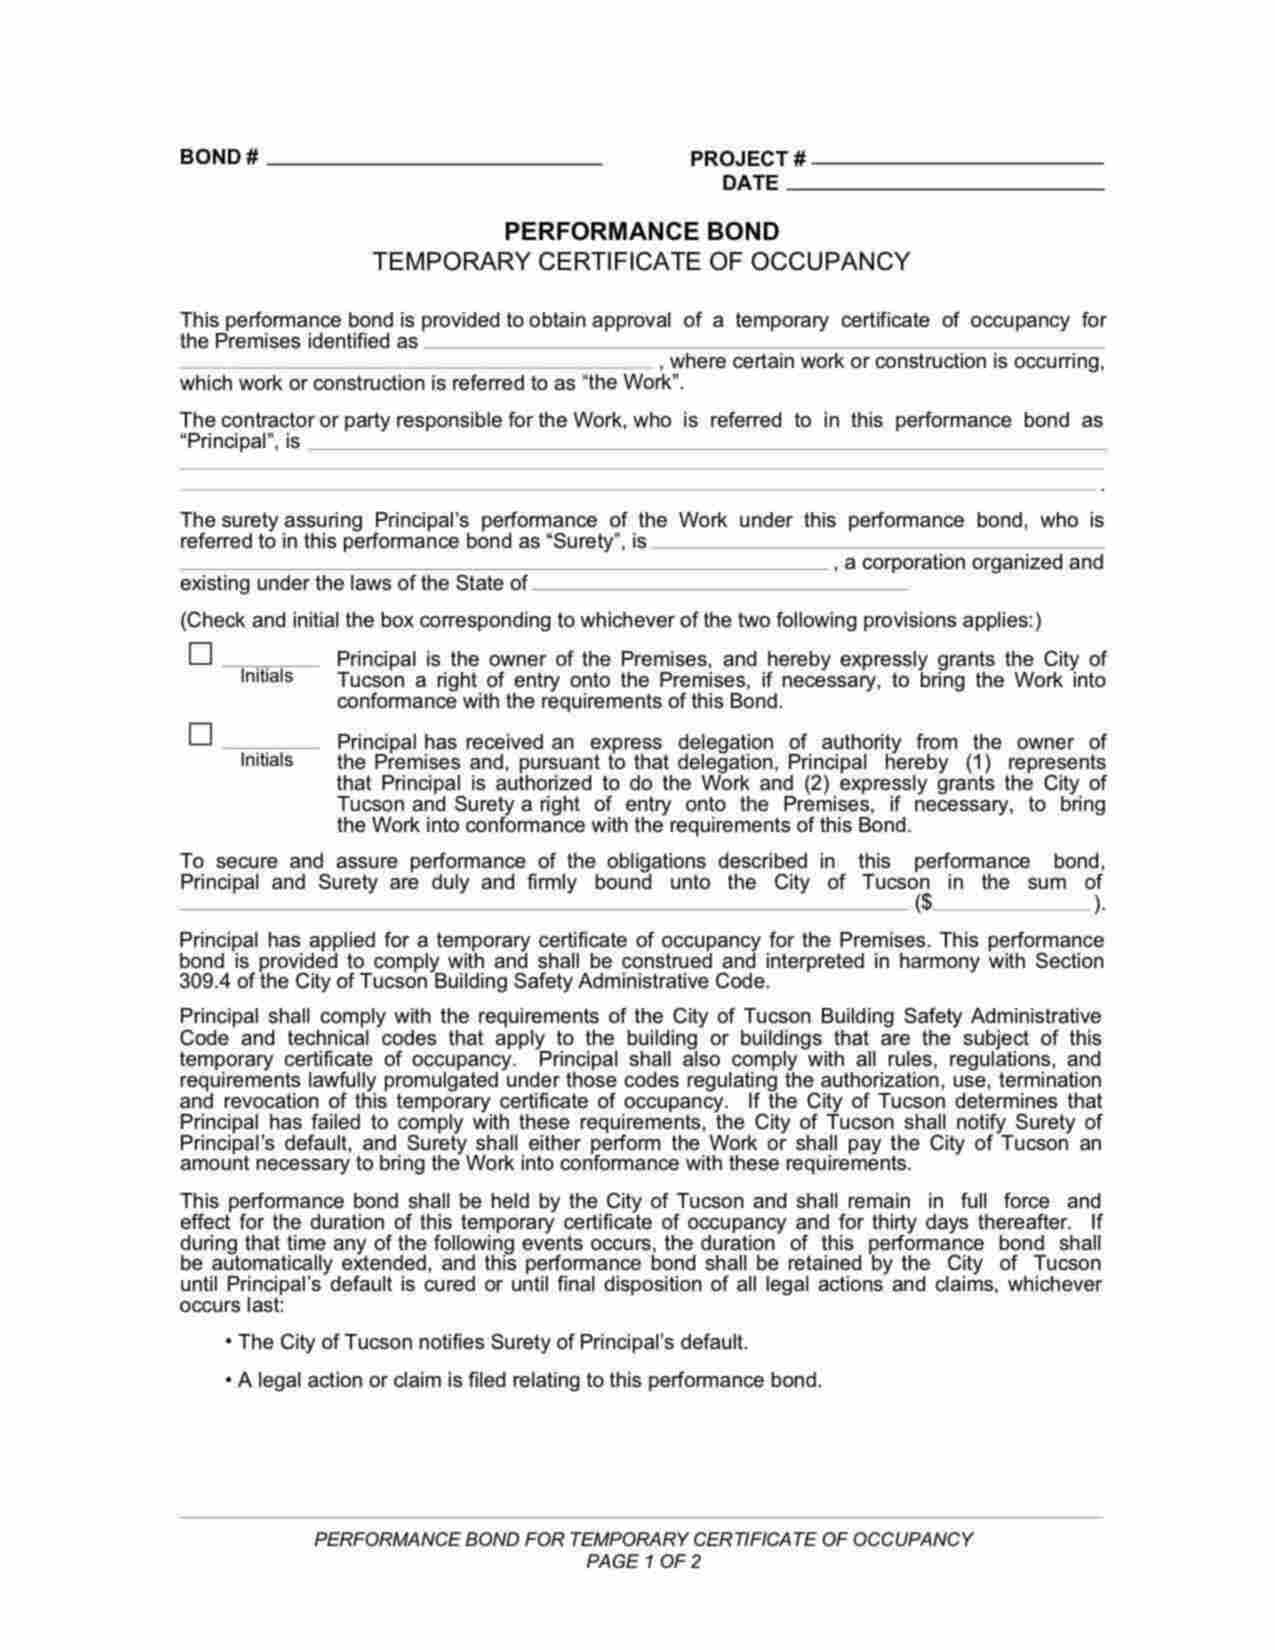 Arizona Temporary Certificate of Occupancy Bond Form